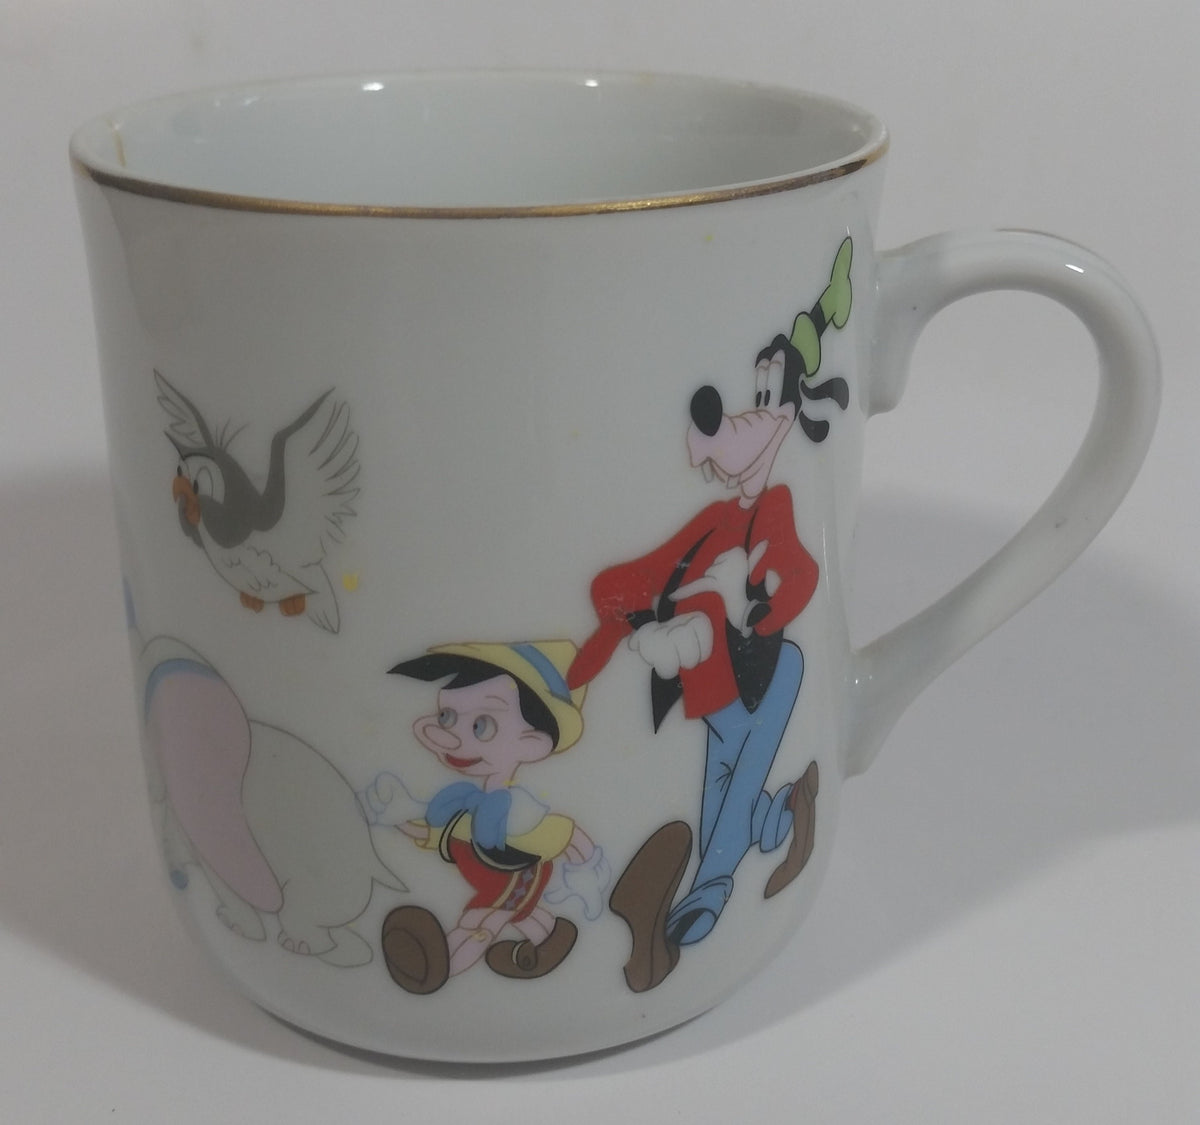 MICKEY MOUSE - Donald Duck - Mug Shaped : : Mug HMB DISNEY